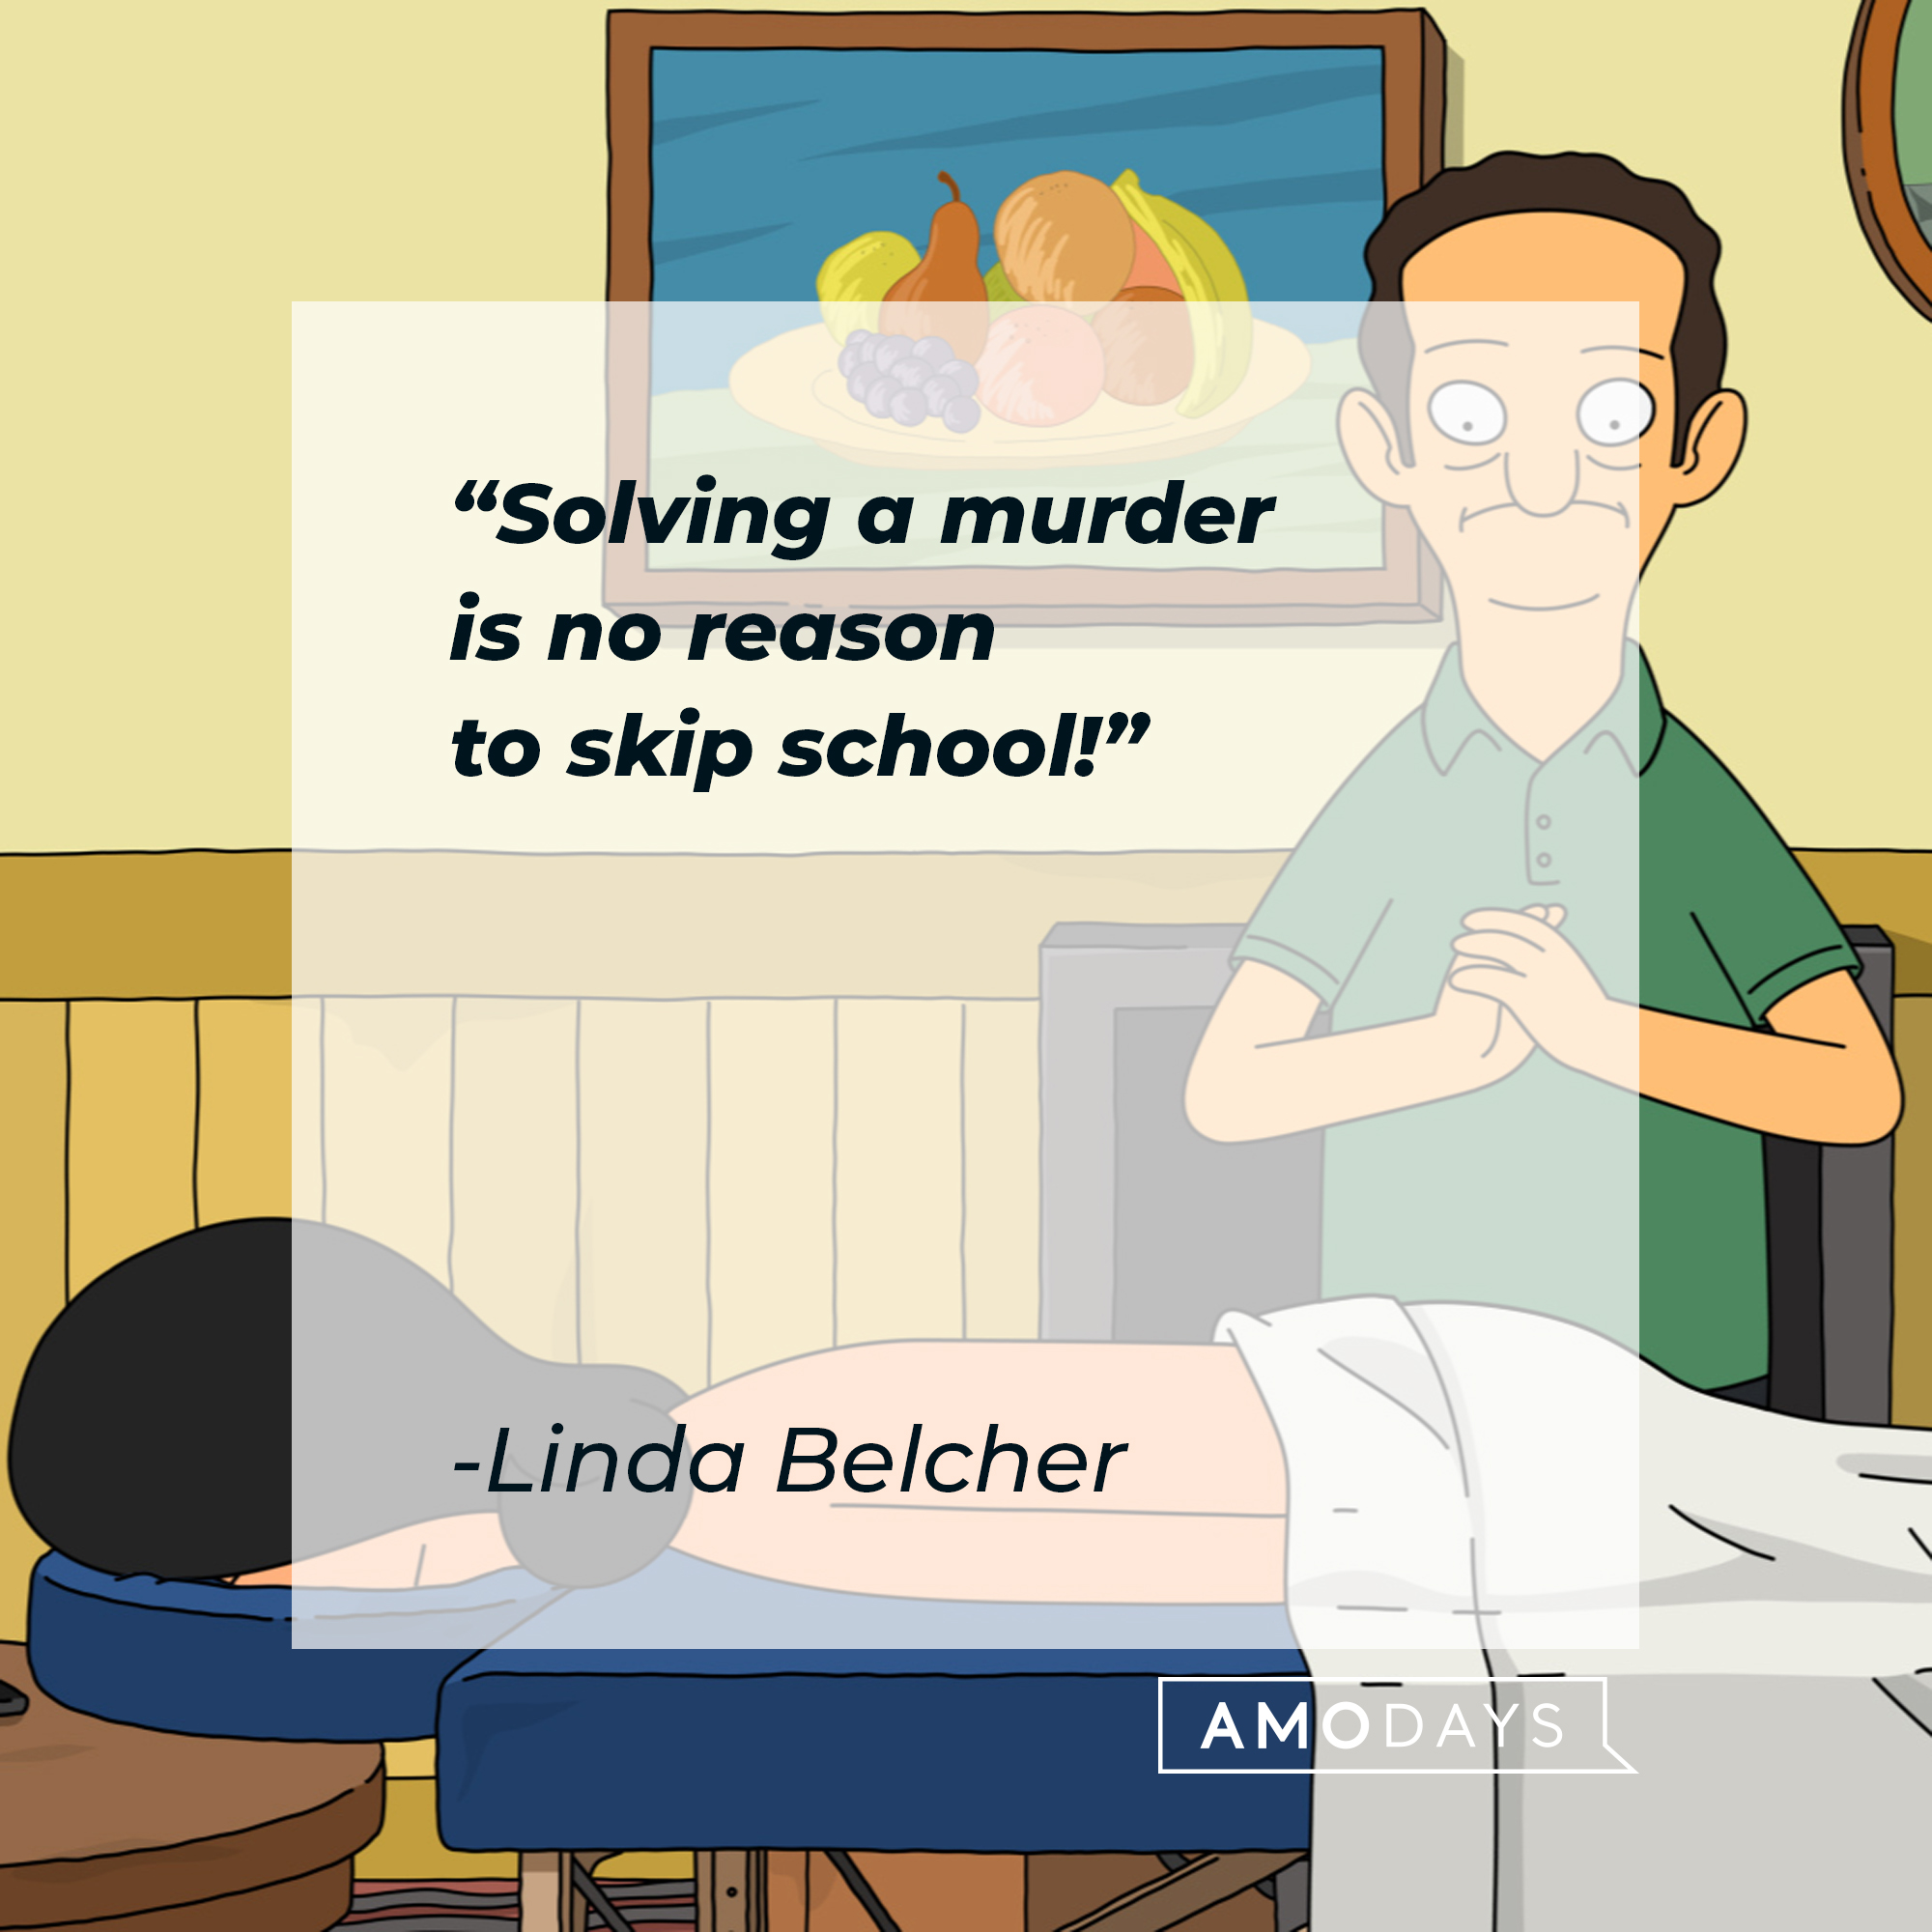 Linda Belcher's quote: "Solving a murder is no reason to skip school!" | Source: facebook.com/BobsBurgers